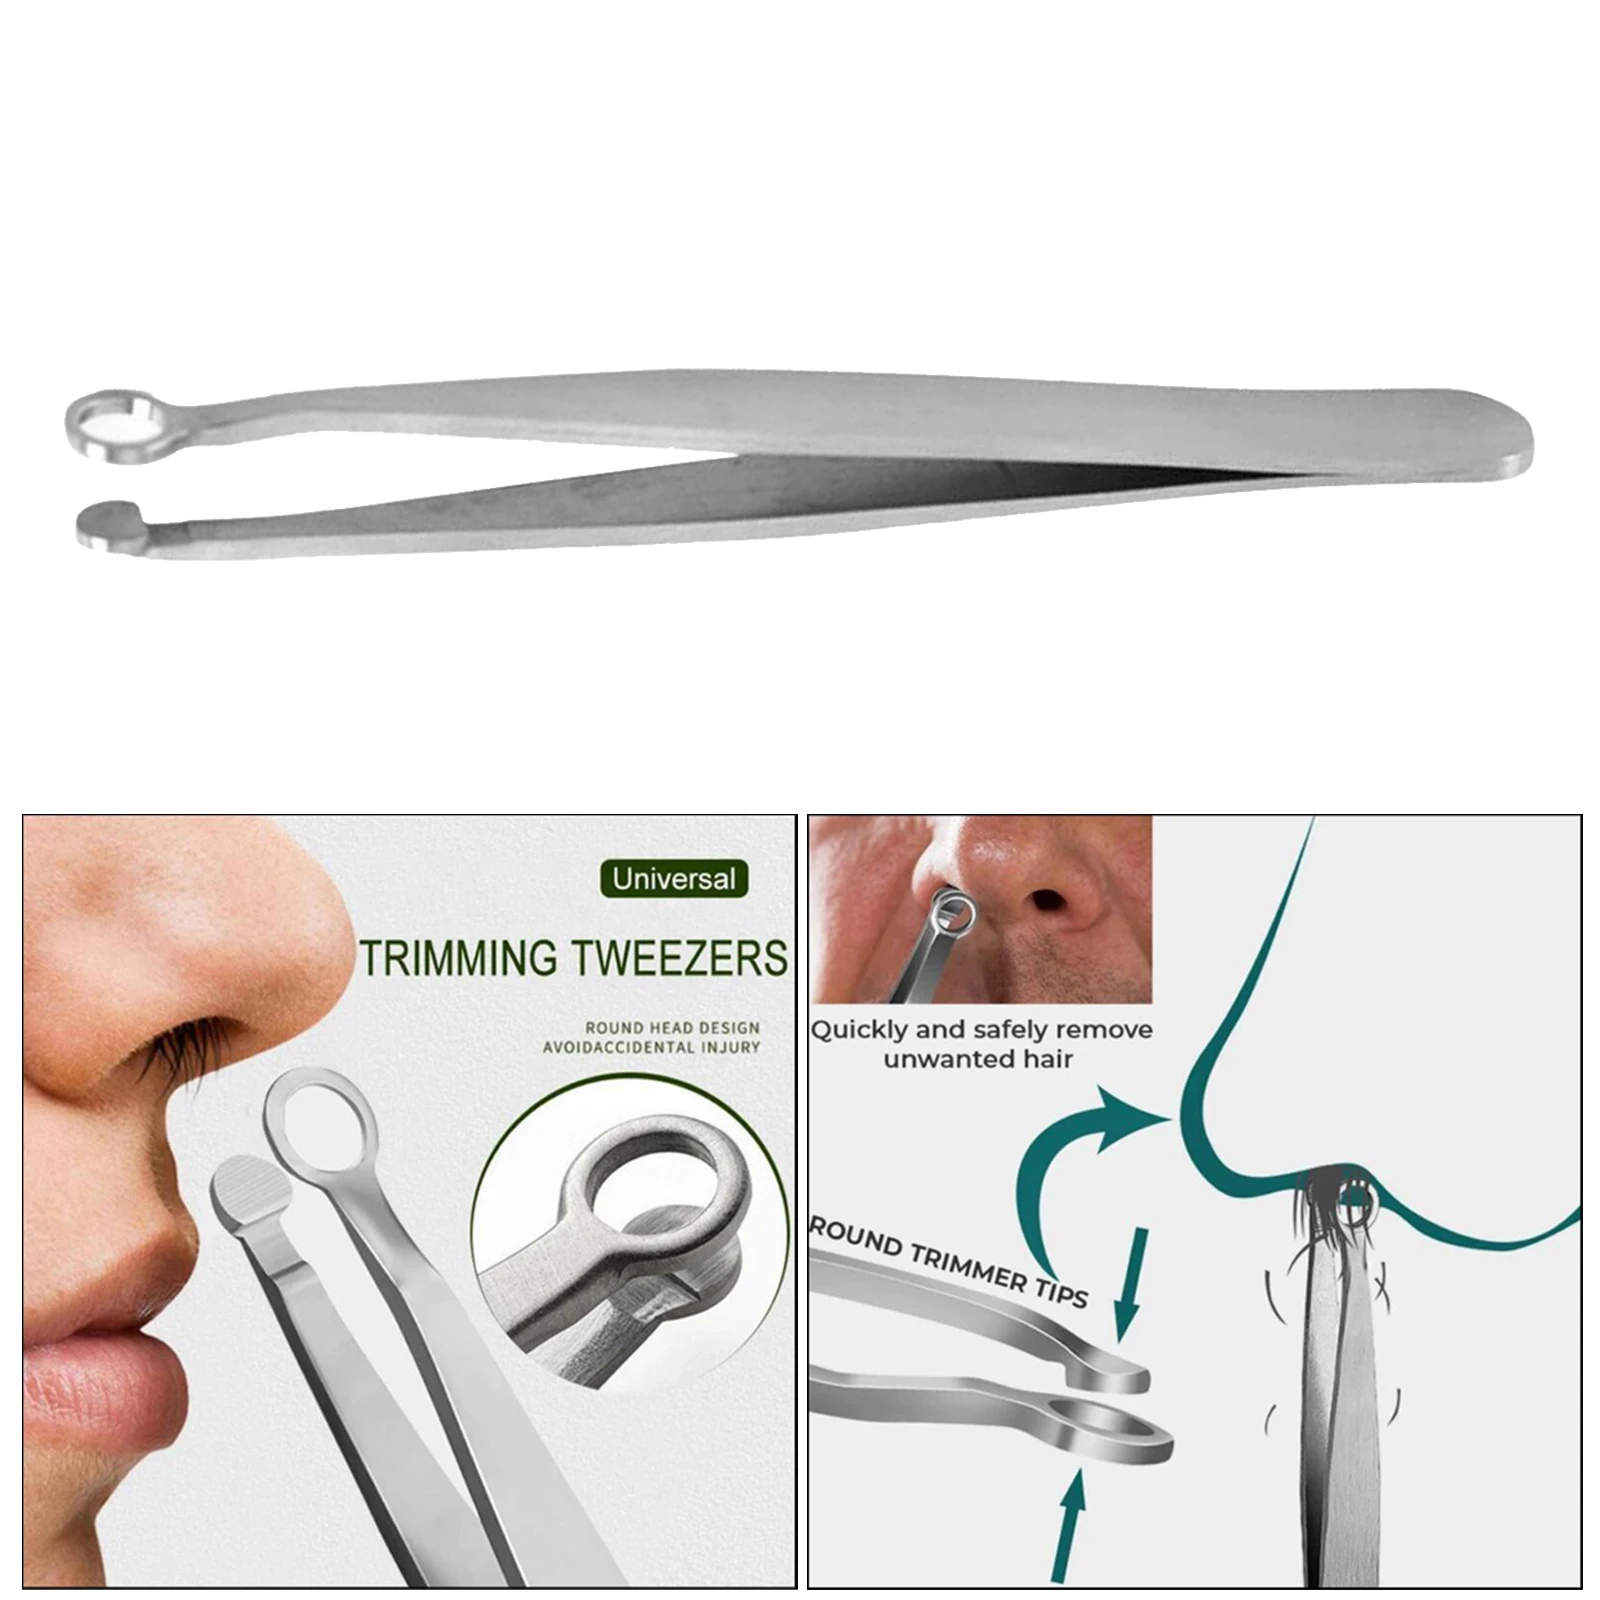 Universal Nose Hair Trimming Tweezers Safe Face Hair Shaving Trimmer Round Tip Design Eyebrow Grooming Nose Hair Cut Makeup Tool